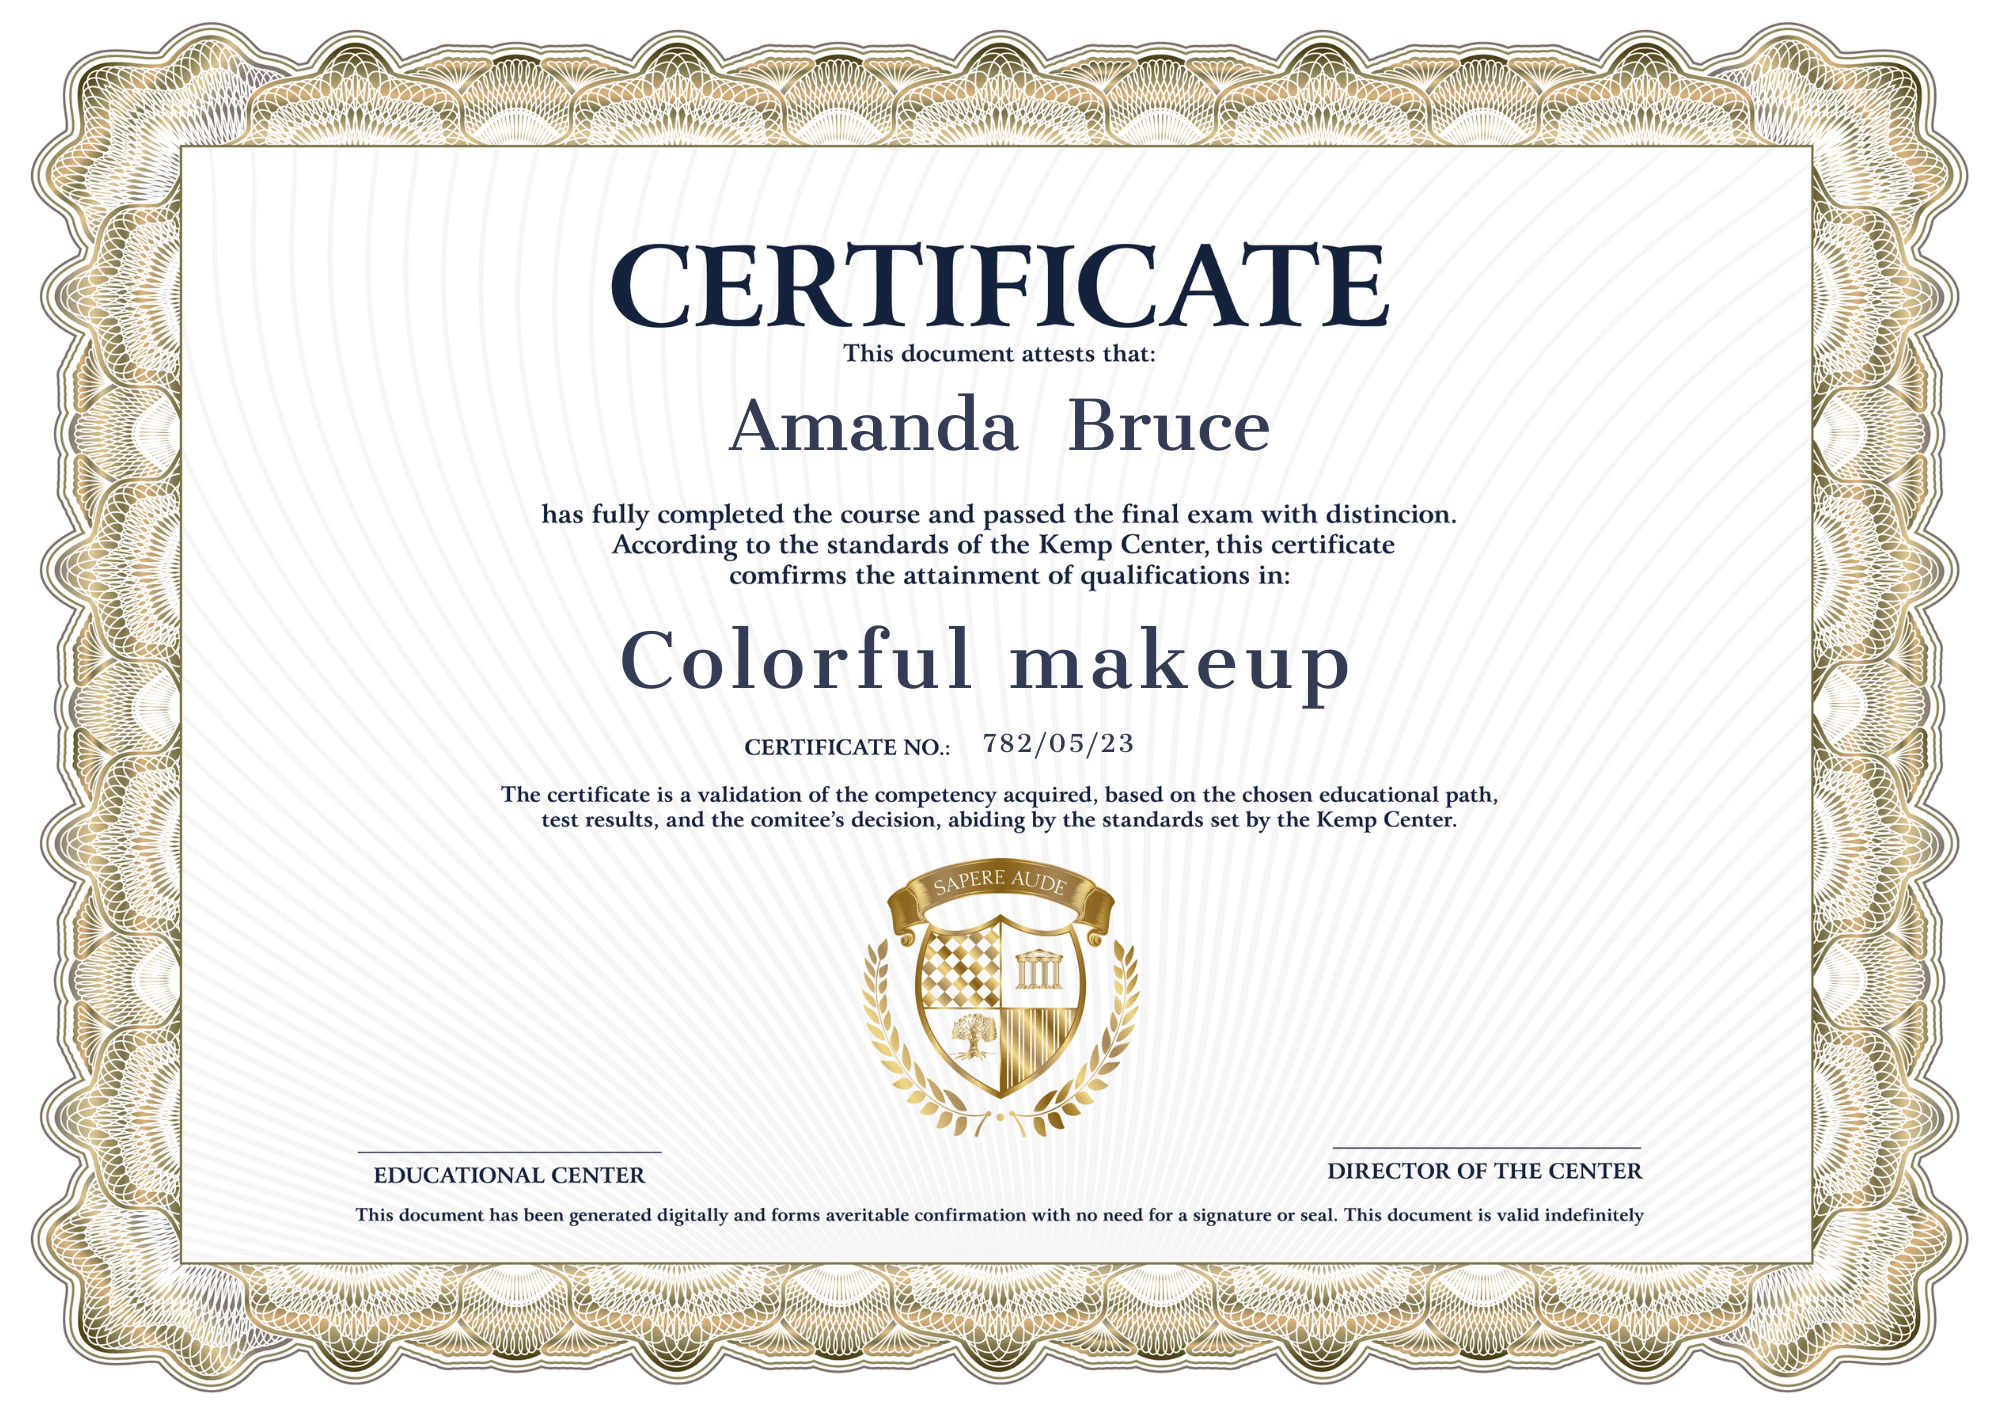 Certificate Colorful makeup